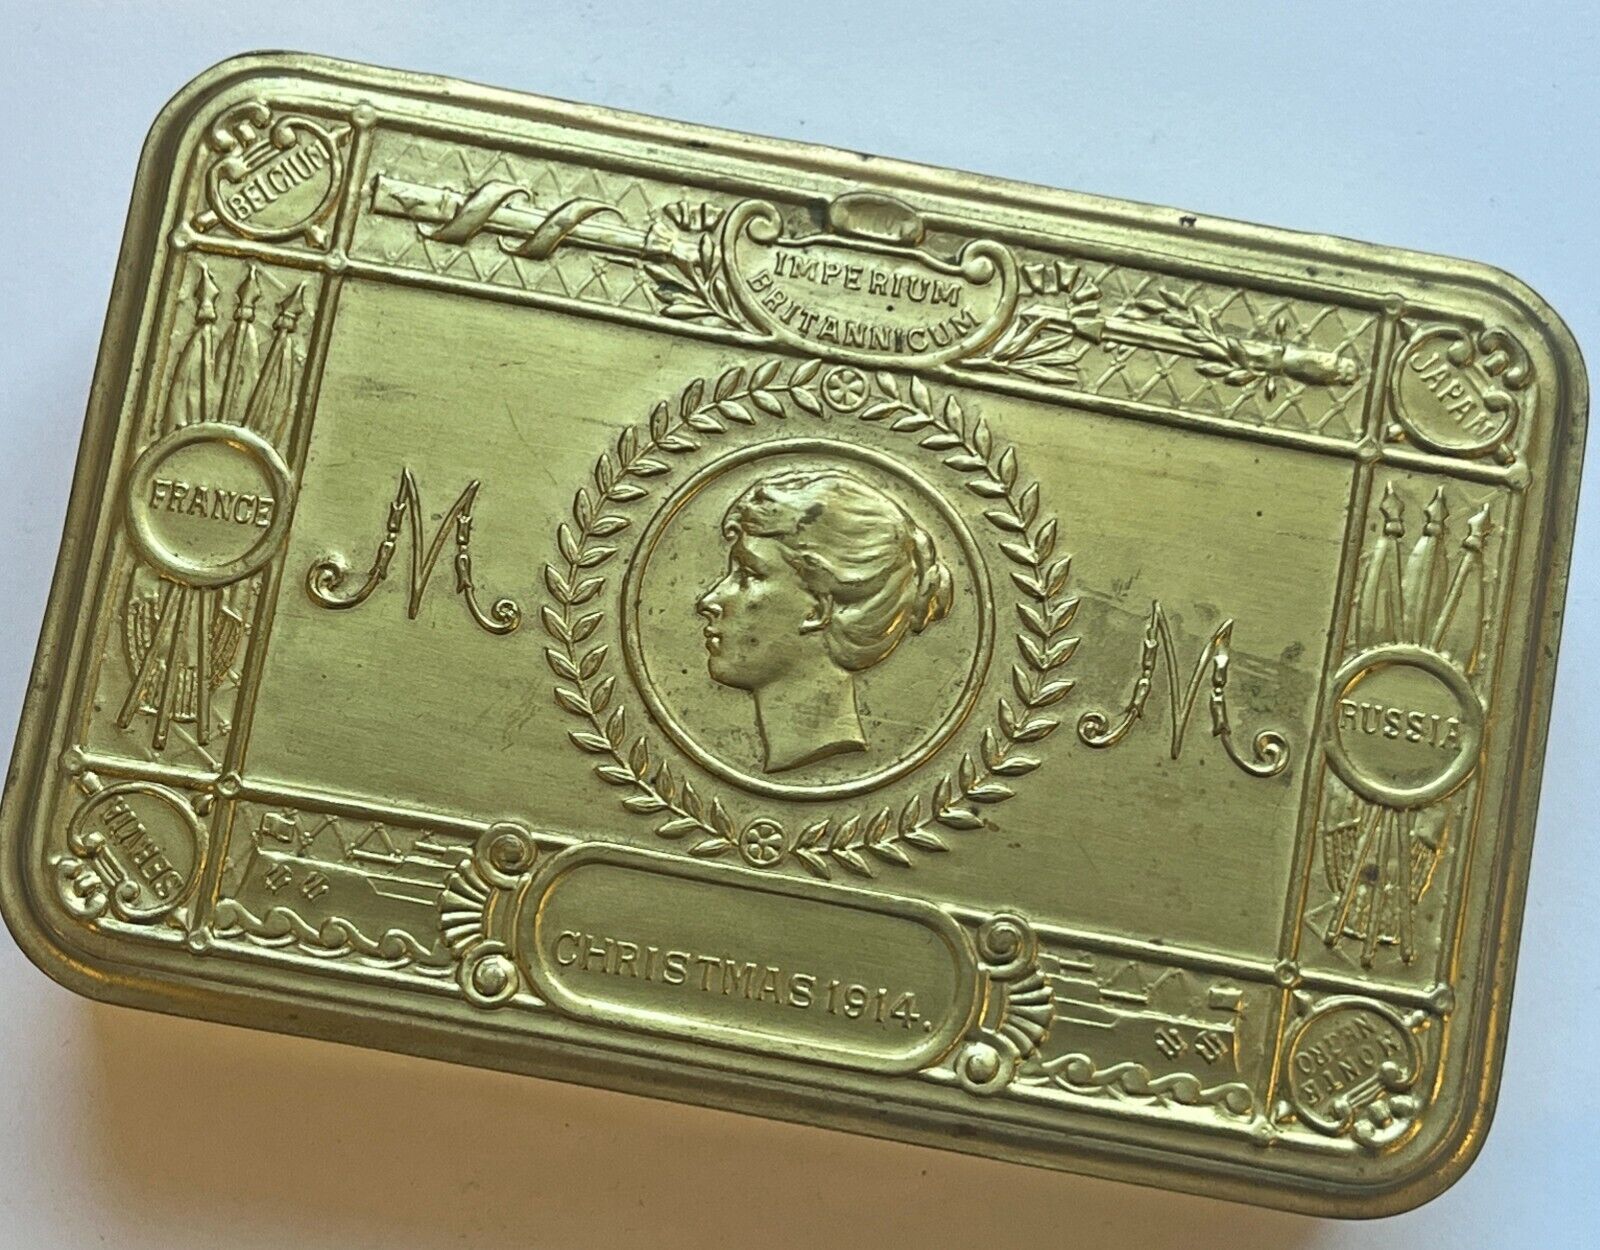 WW1 1914 Princess Mary Christmas tin, tobacco or Chocolate               [29631]